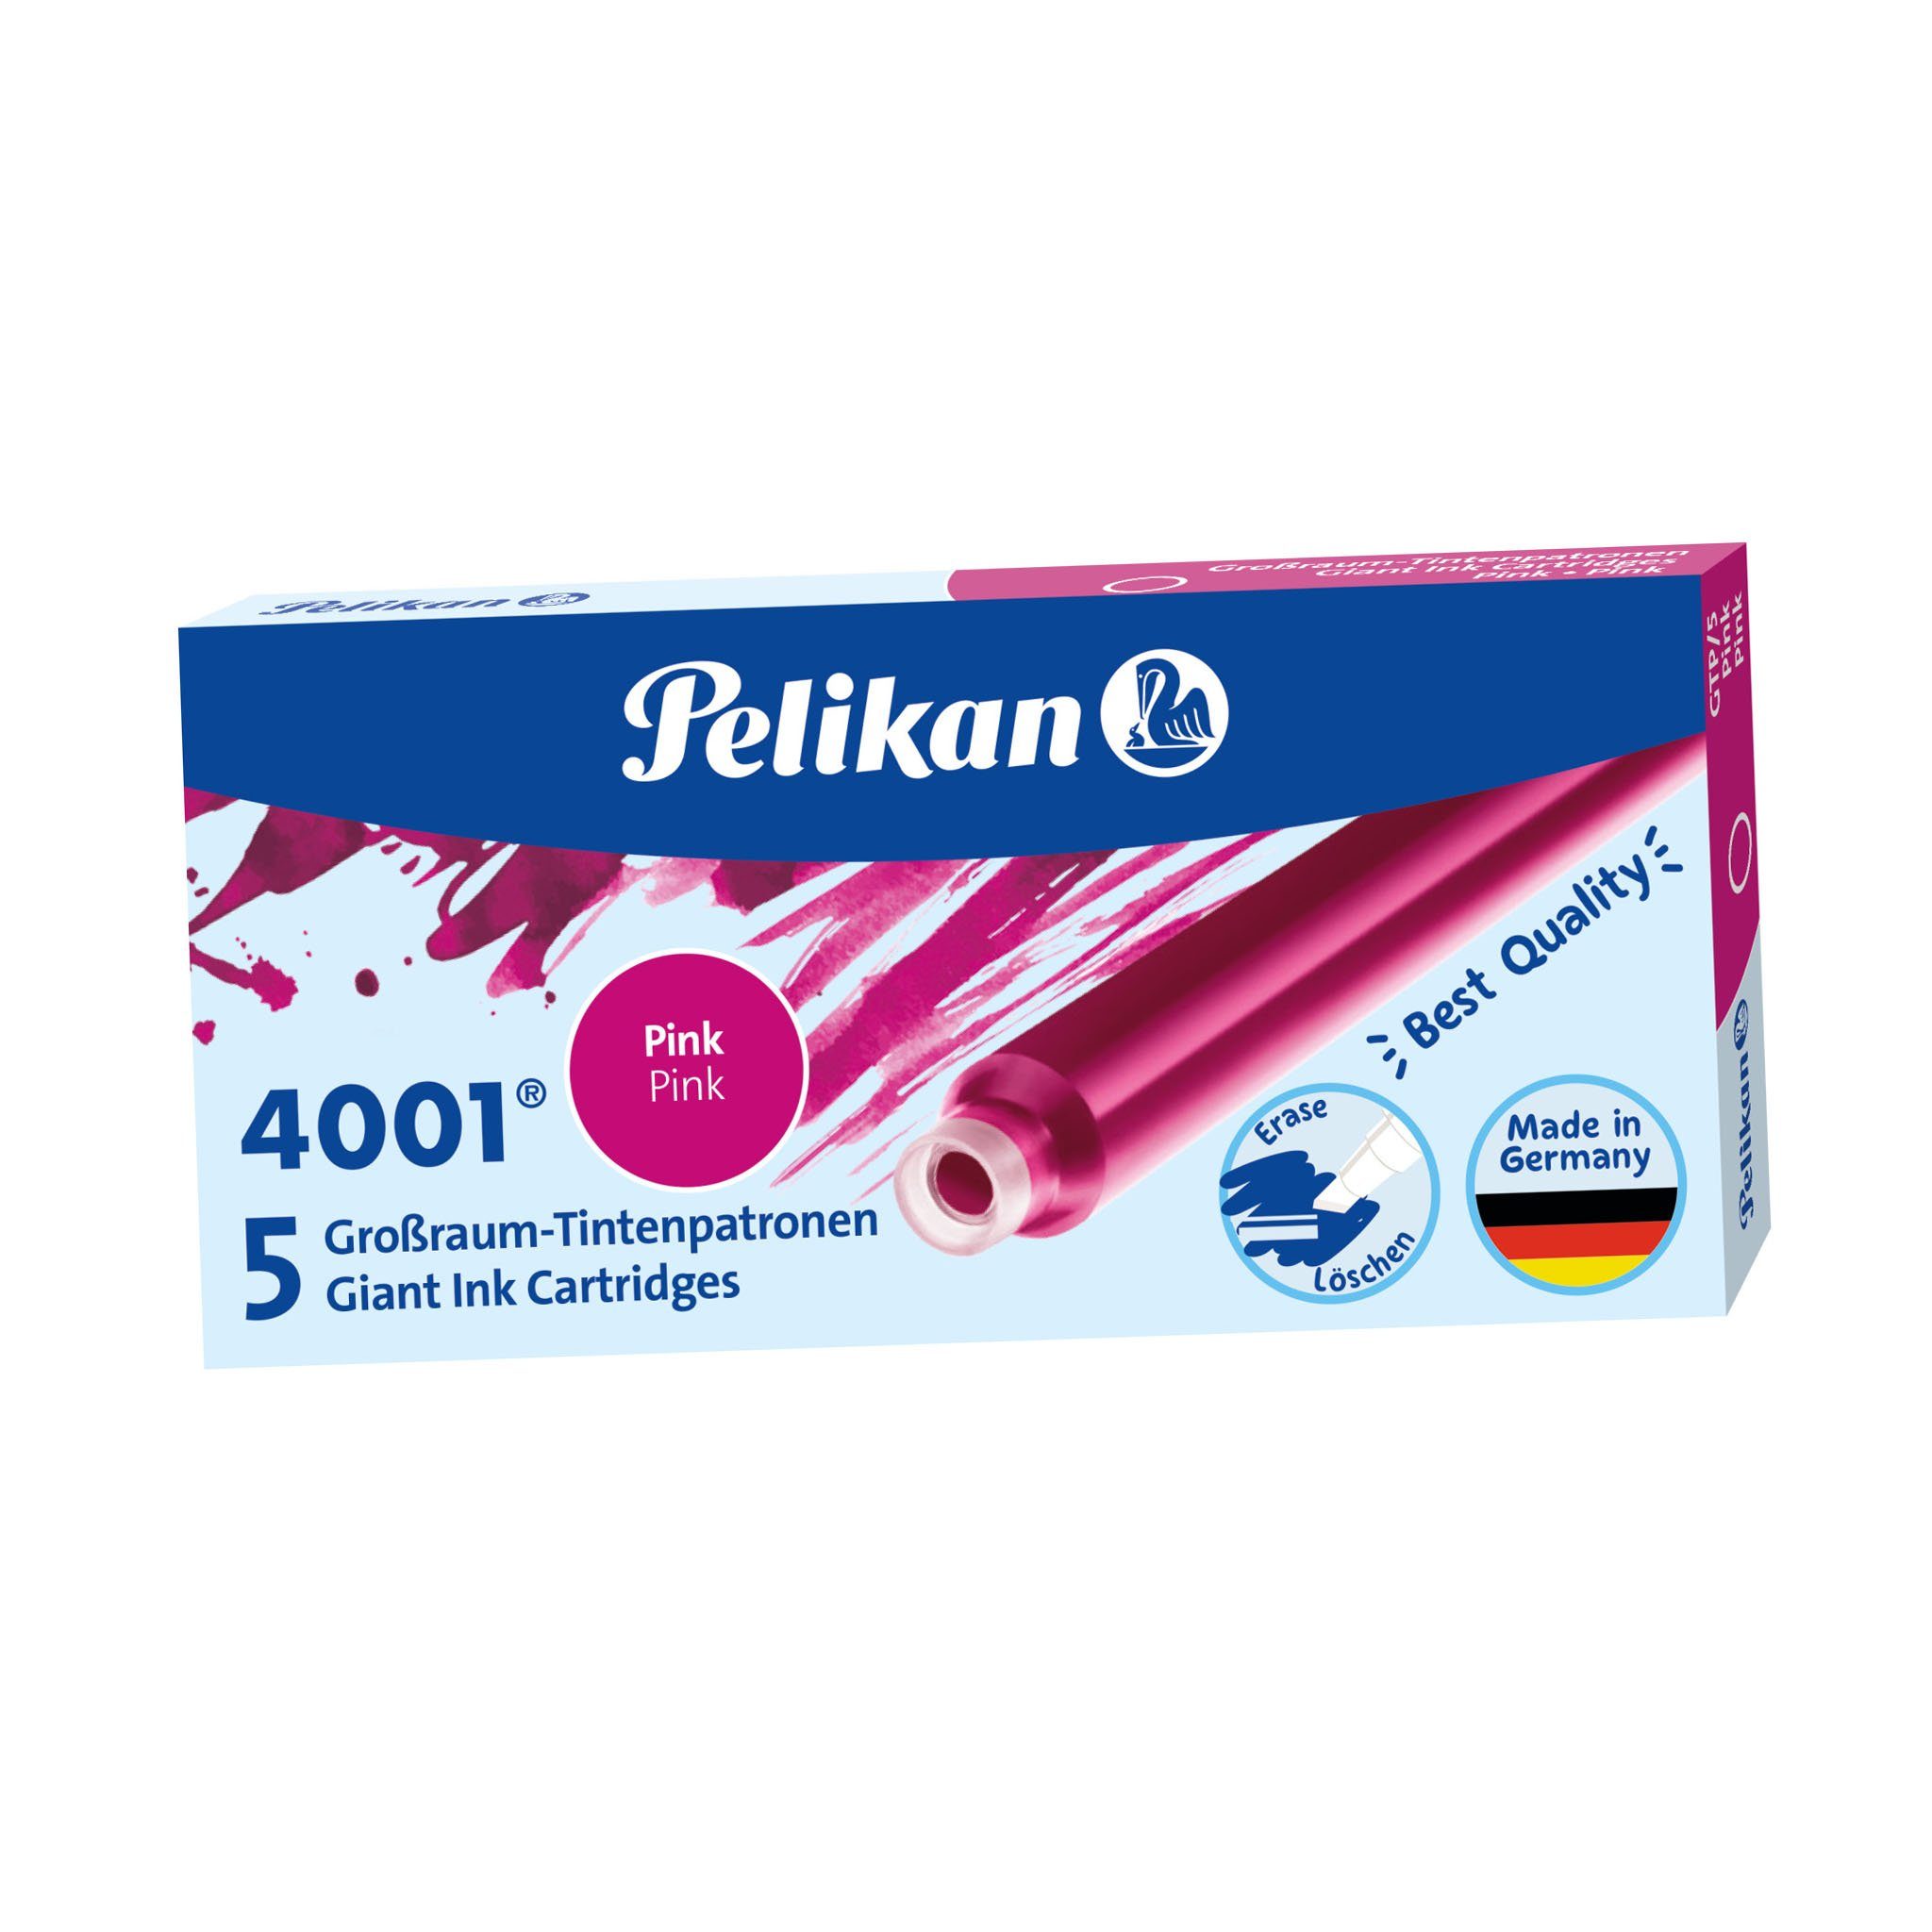 Großraum-Tintenpatronen pink GTP/5, Pelikan Füllfederhalter Pelikan 4001